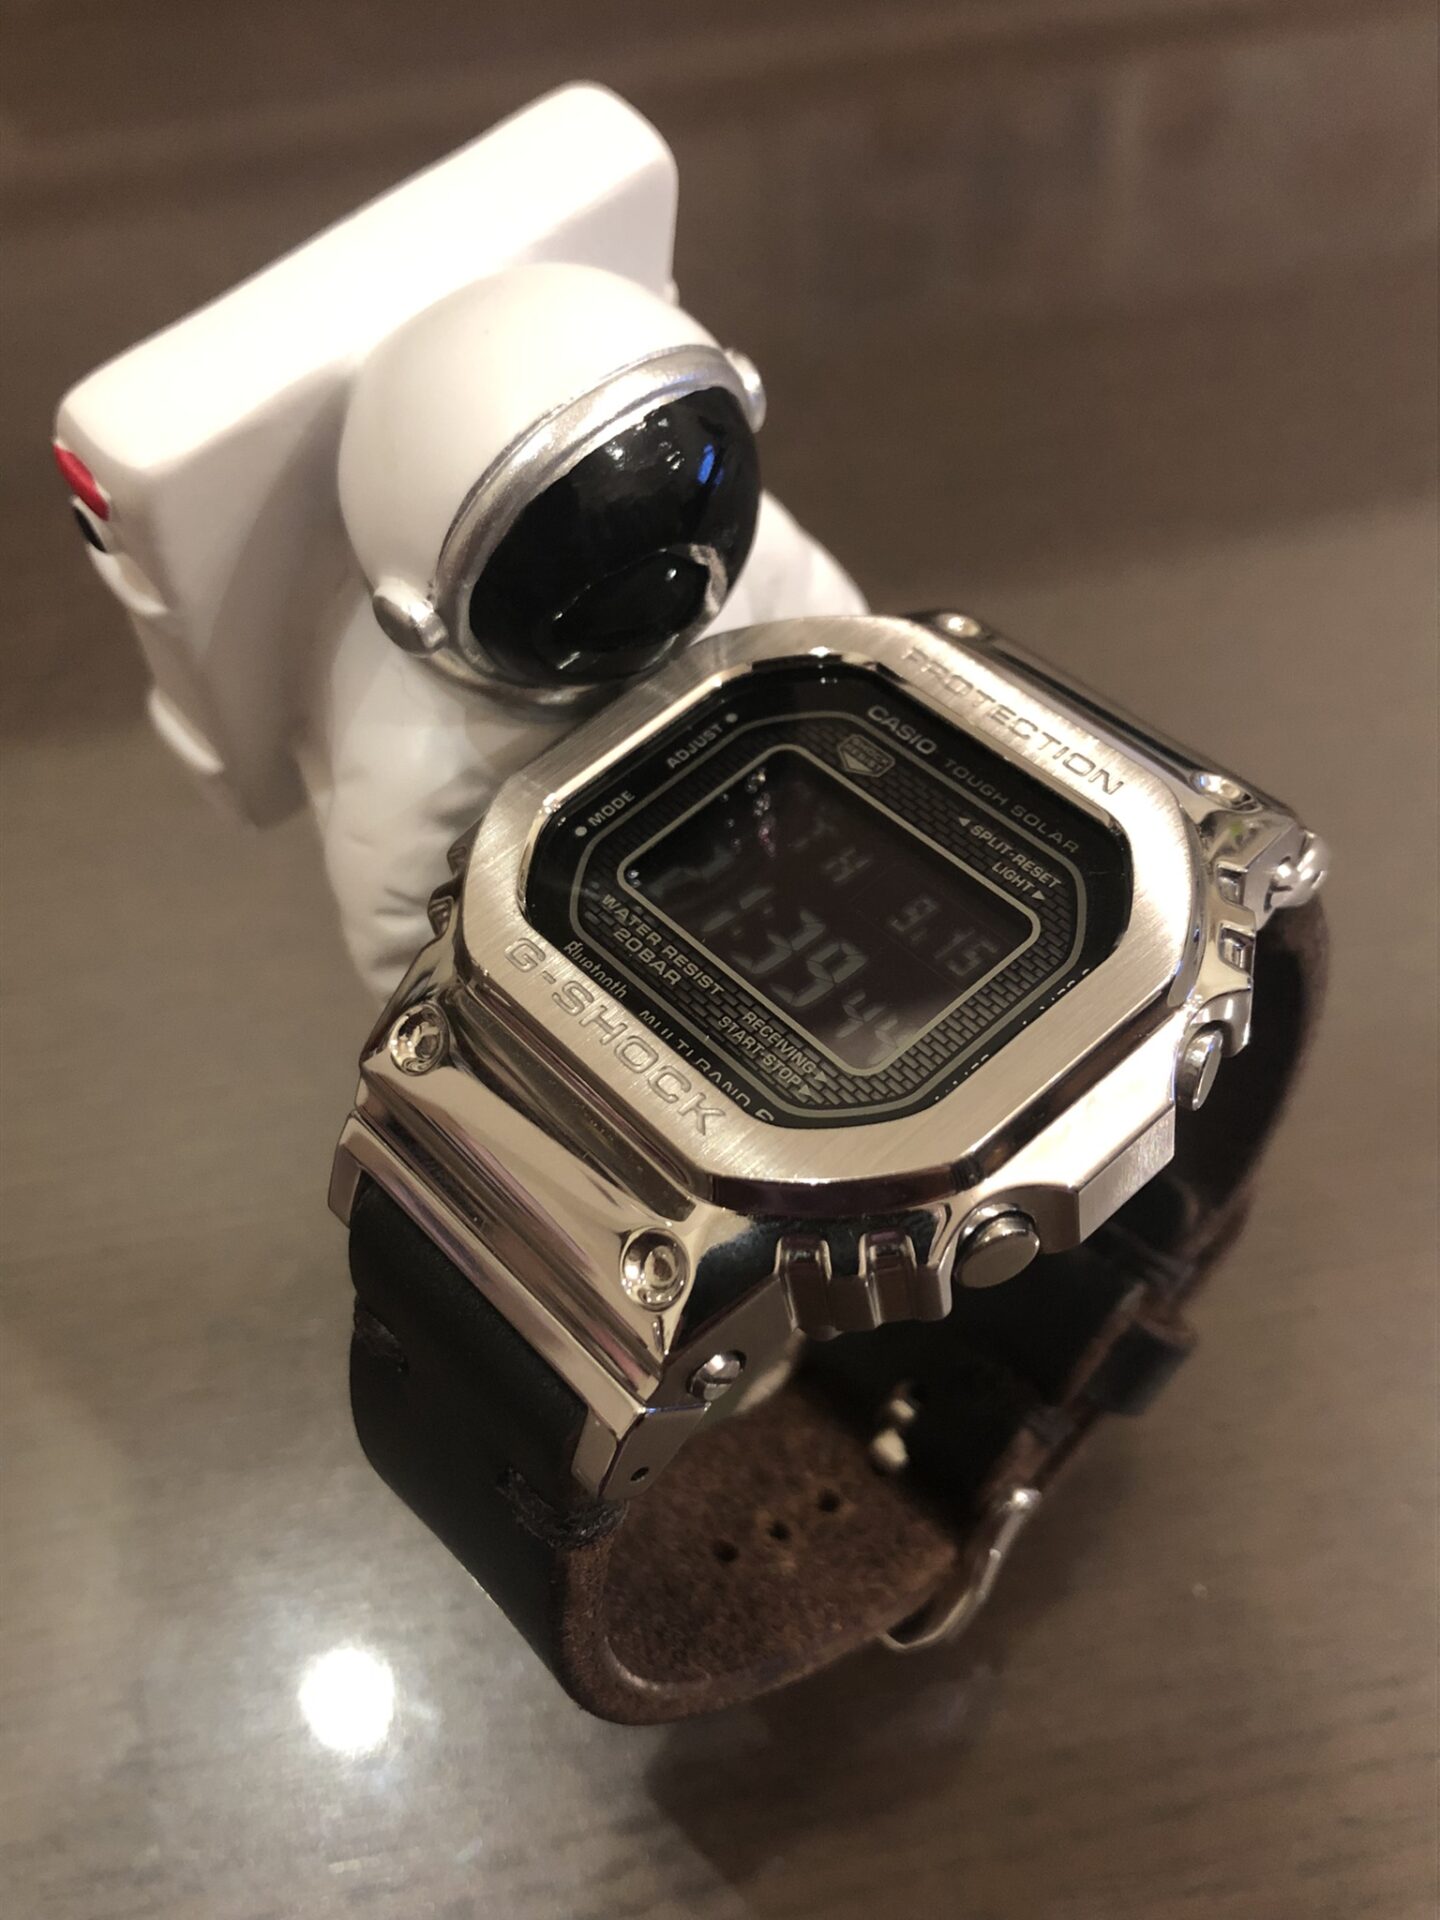 CASIO G-SHOCK GMW-B5000-1JF メタルバンド交換済み - 腕時計(デジタル)